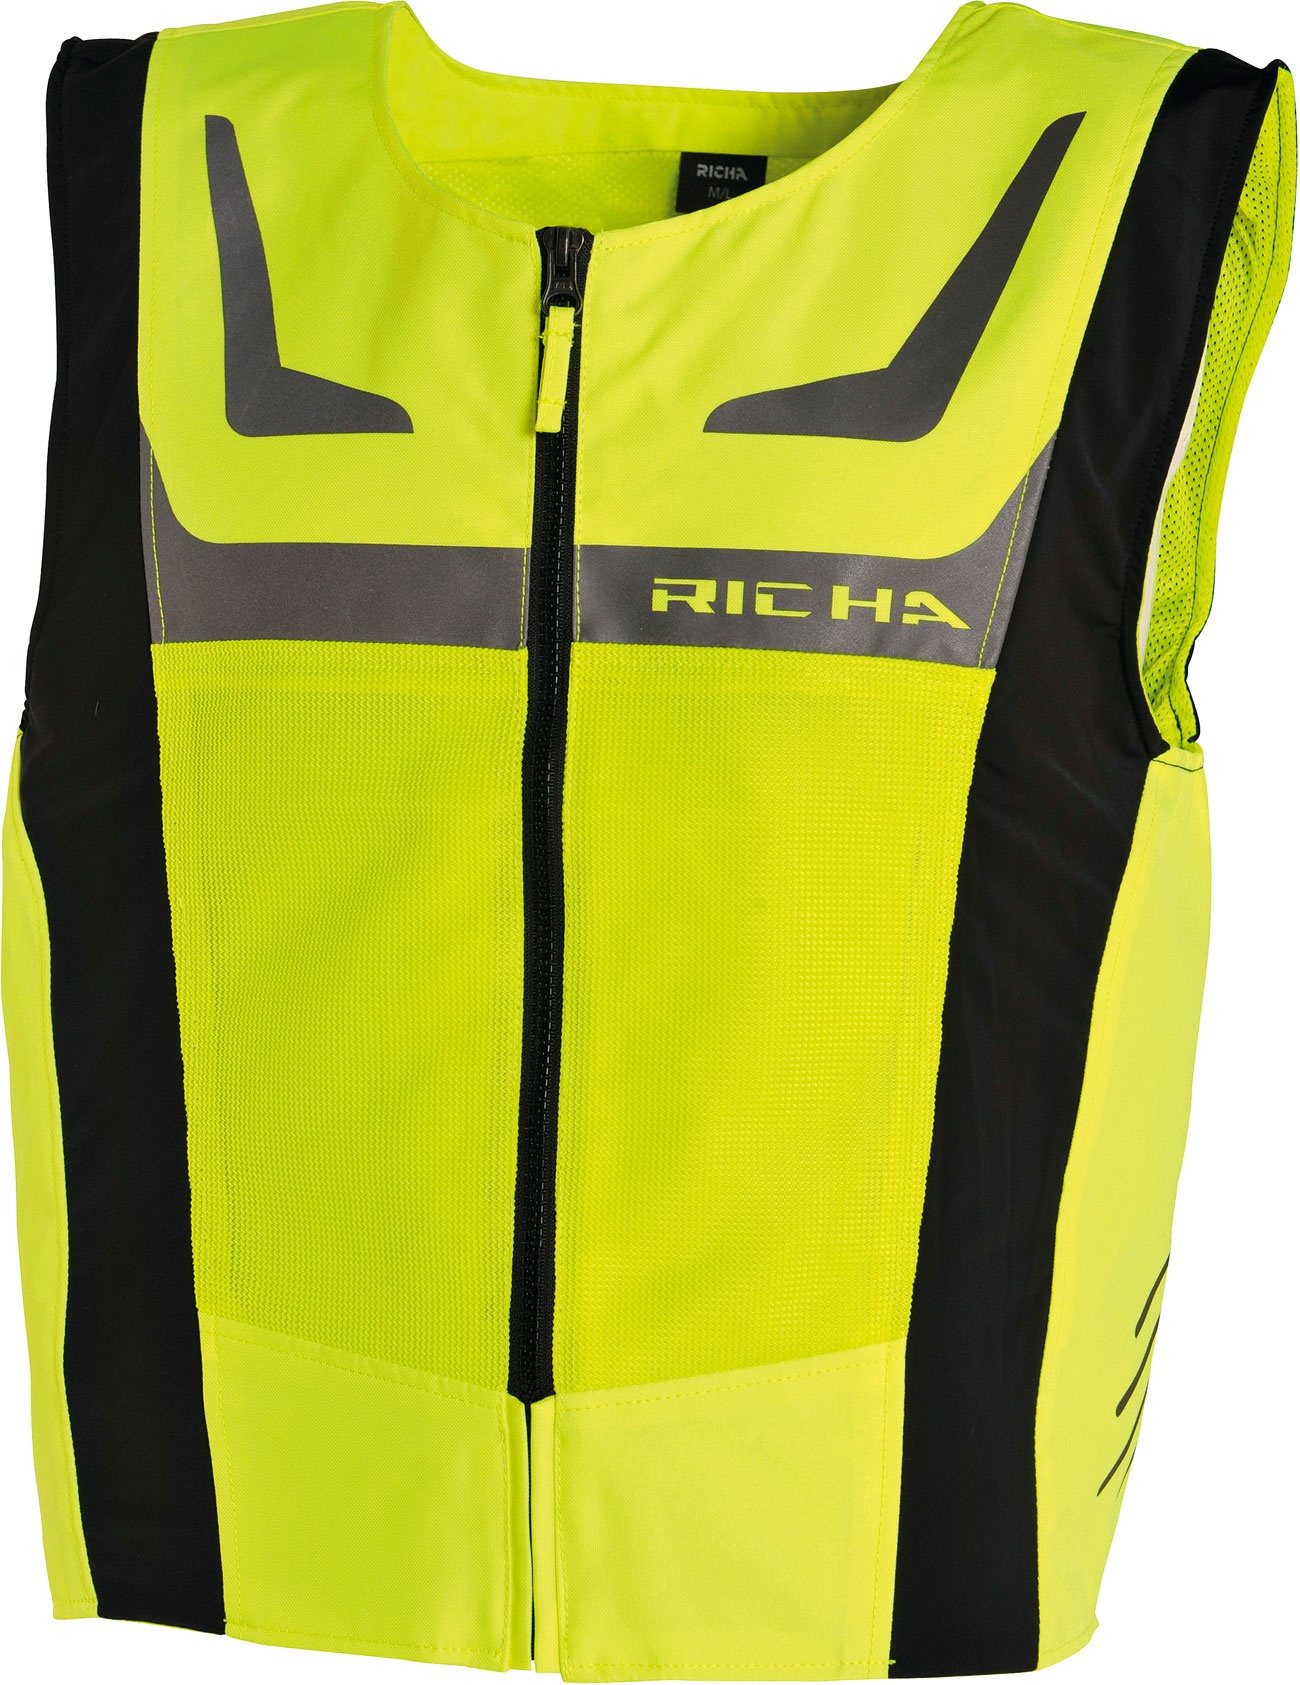 Richa Safety, Warnweste - Neon-Gelb - XS/S